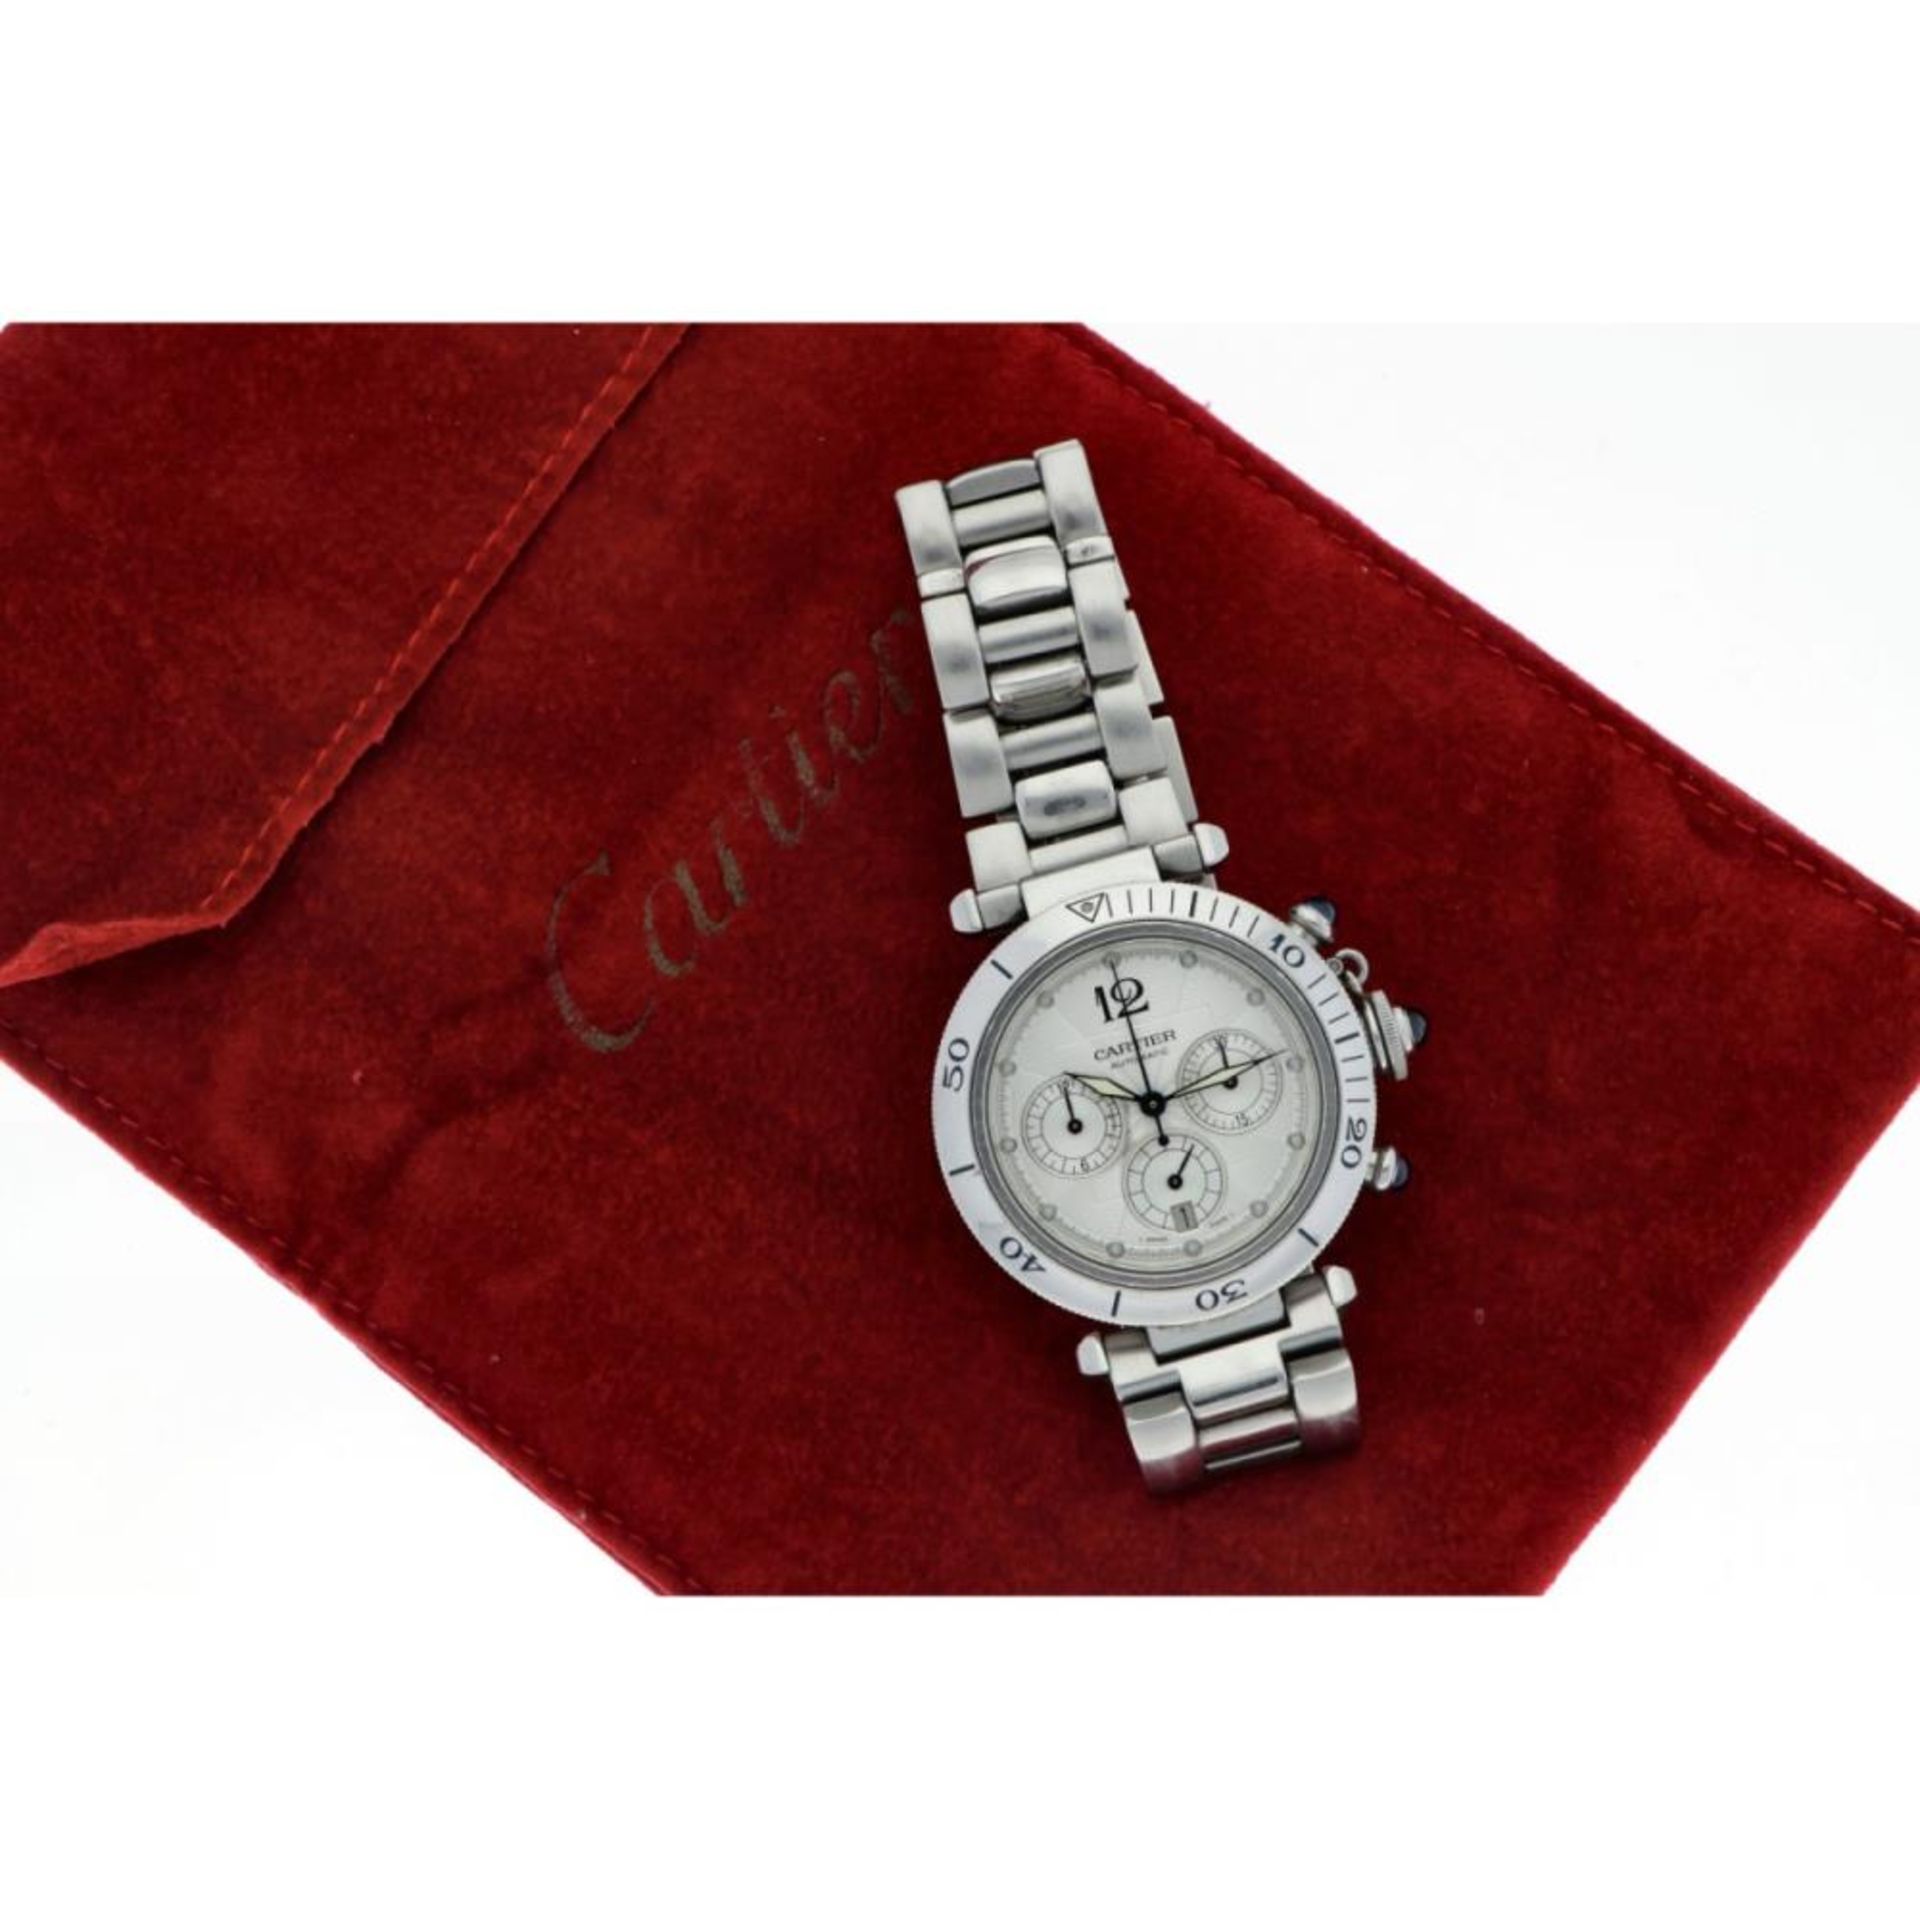 Cartier Pasha 2113 - Men's watch - approx. 2010. - Image 11 of 12